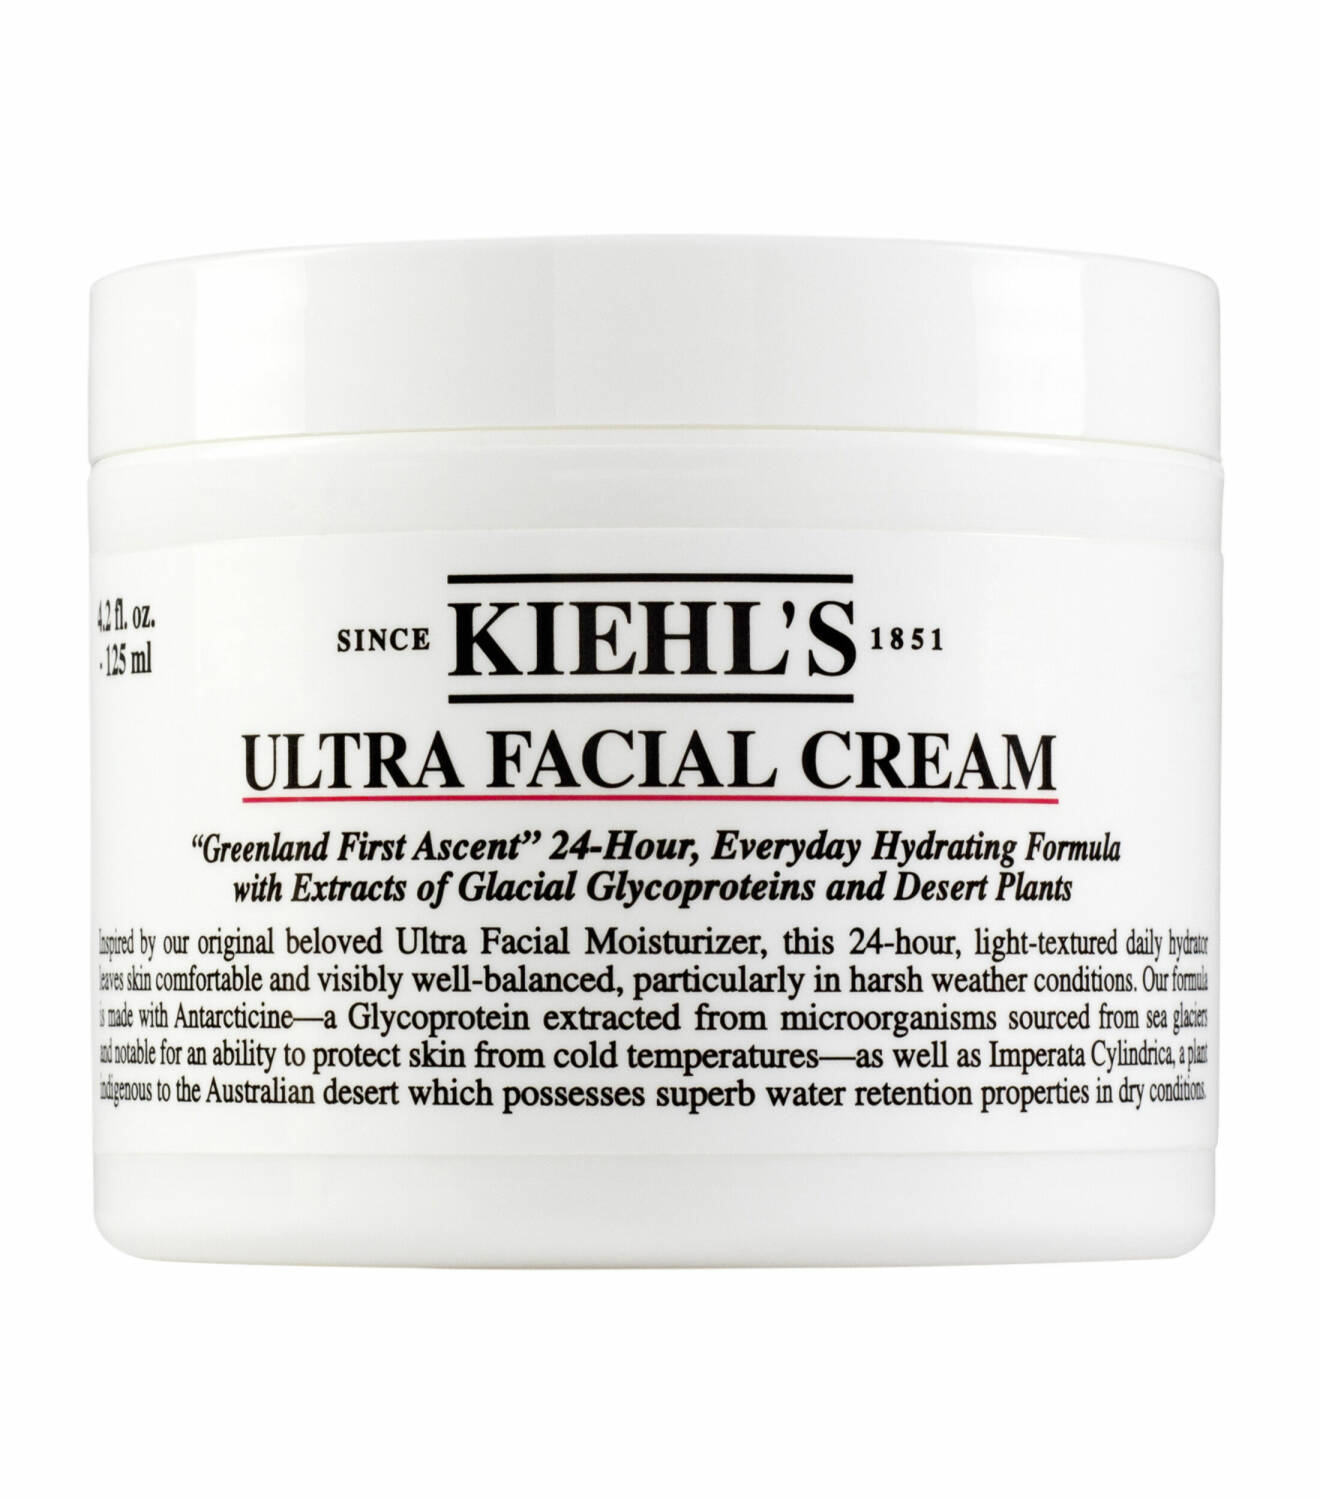 Kiehl’s Ultra Facial Cream.